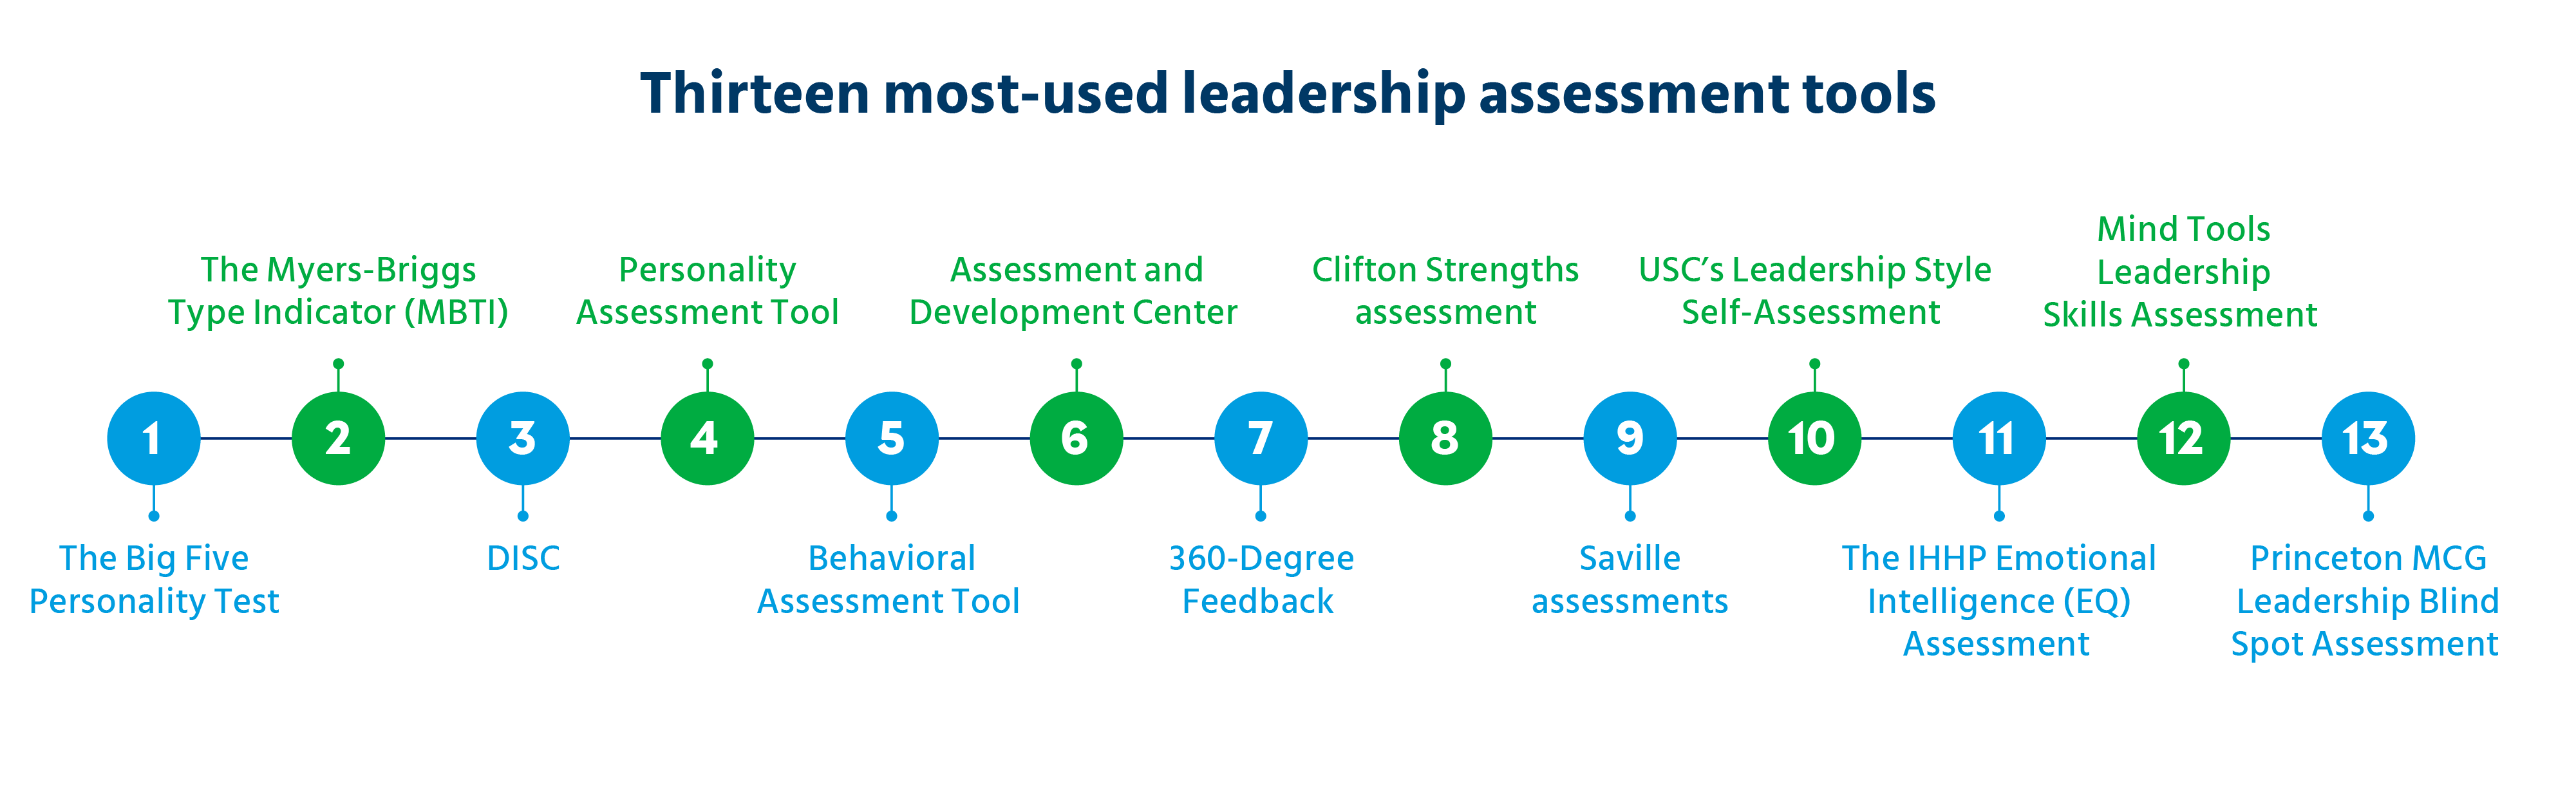 Thirteen most-used leadership assessment tools